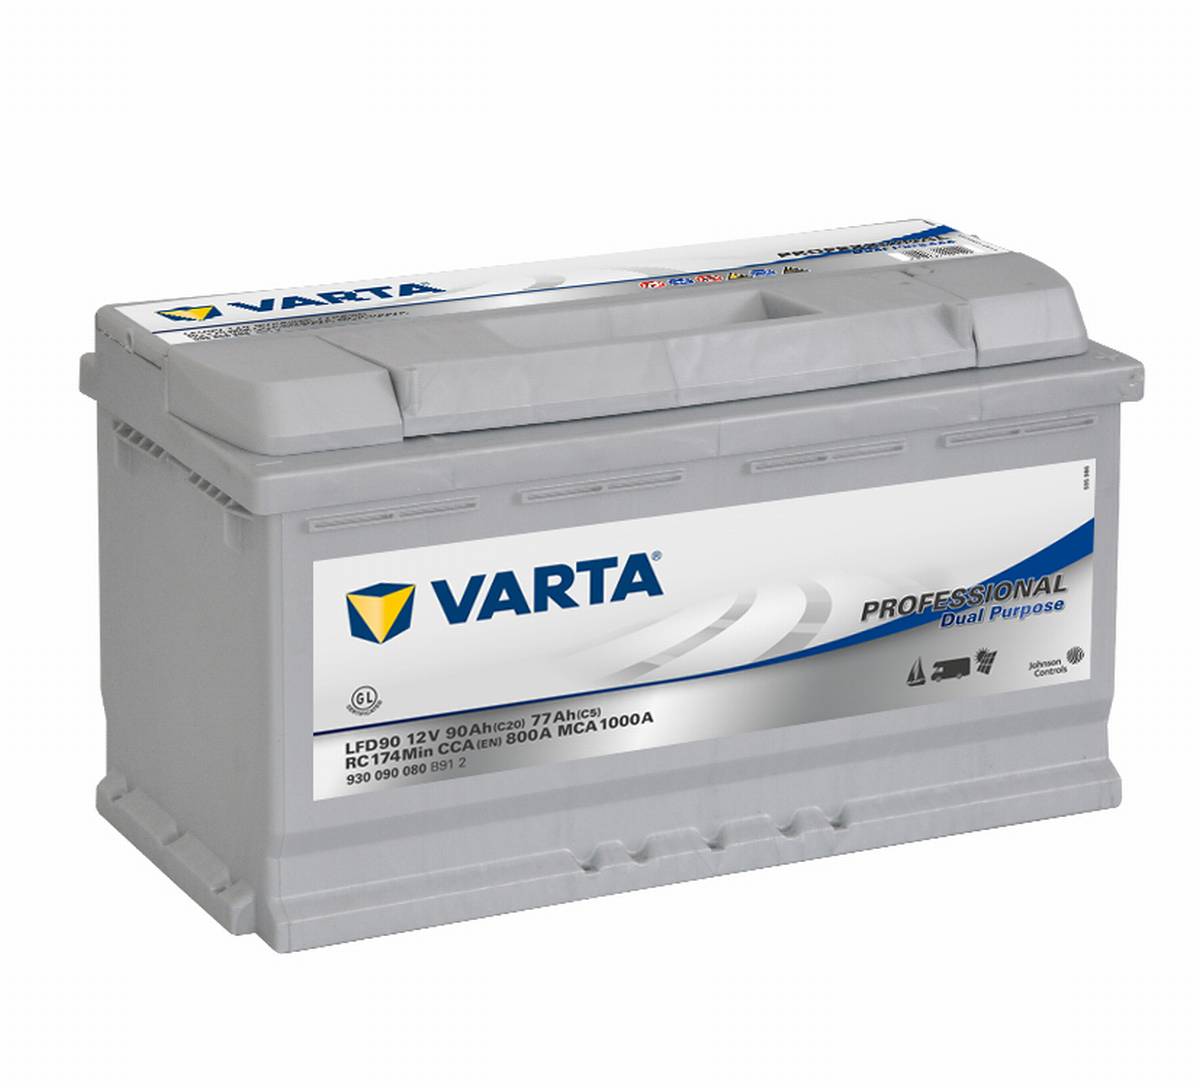 Varta LFD90 Professional Dual Purpose Versorgungsbatterie 12V 90Ah 800A